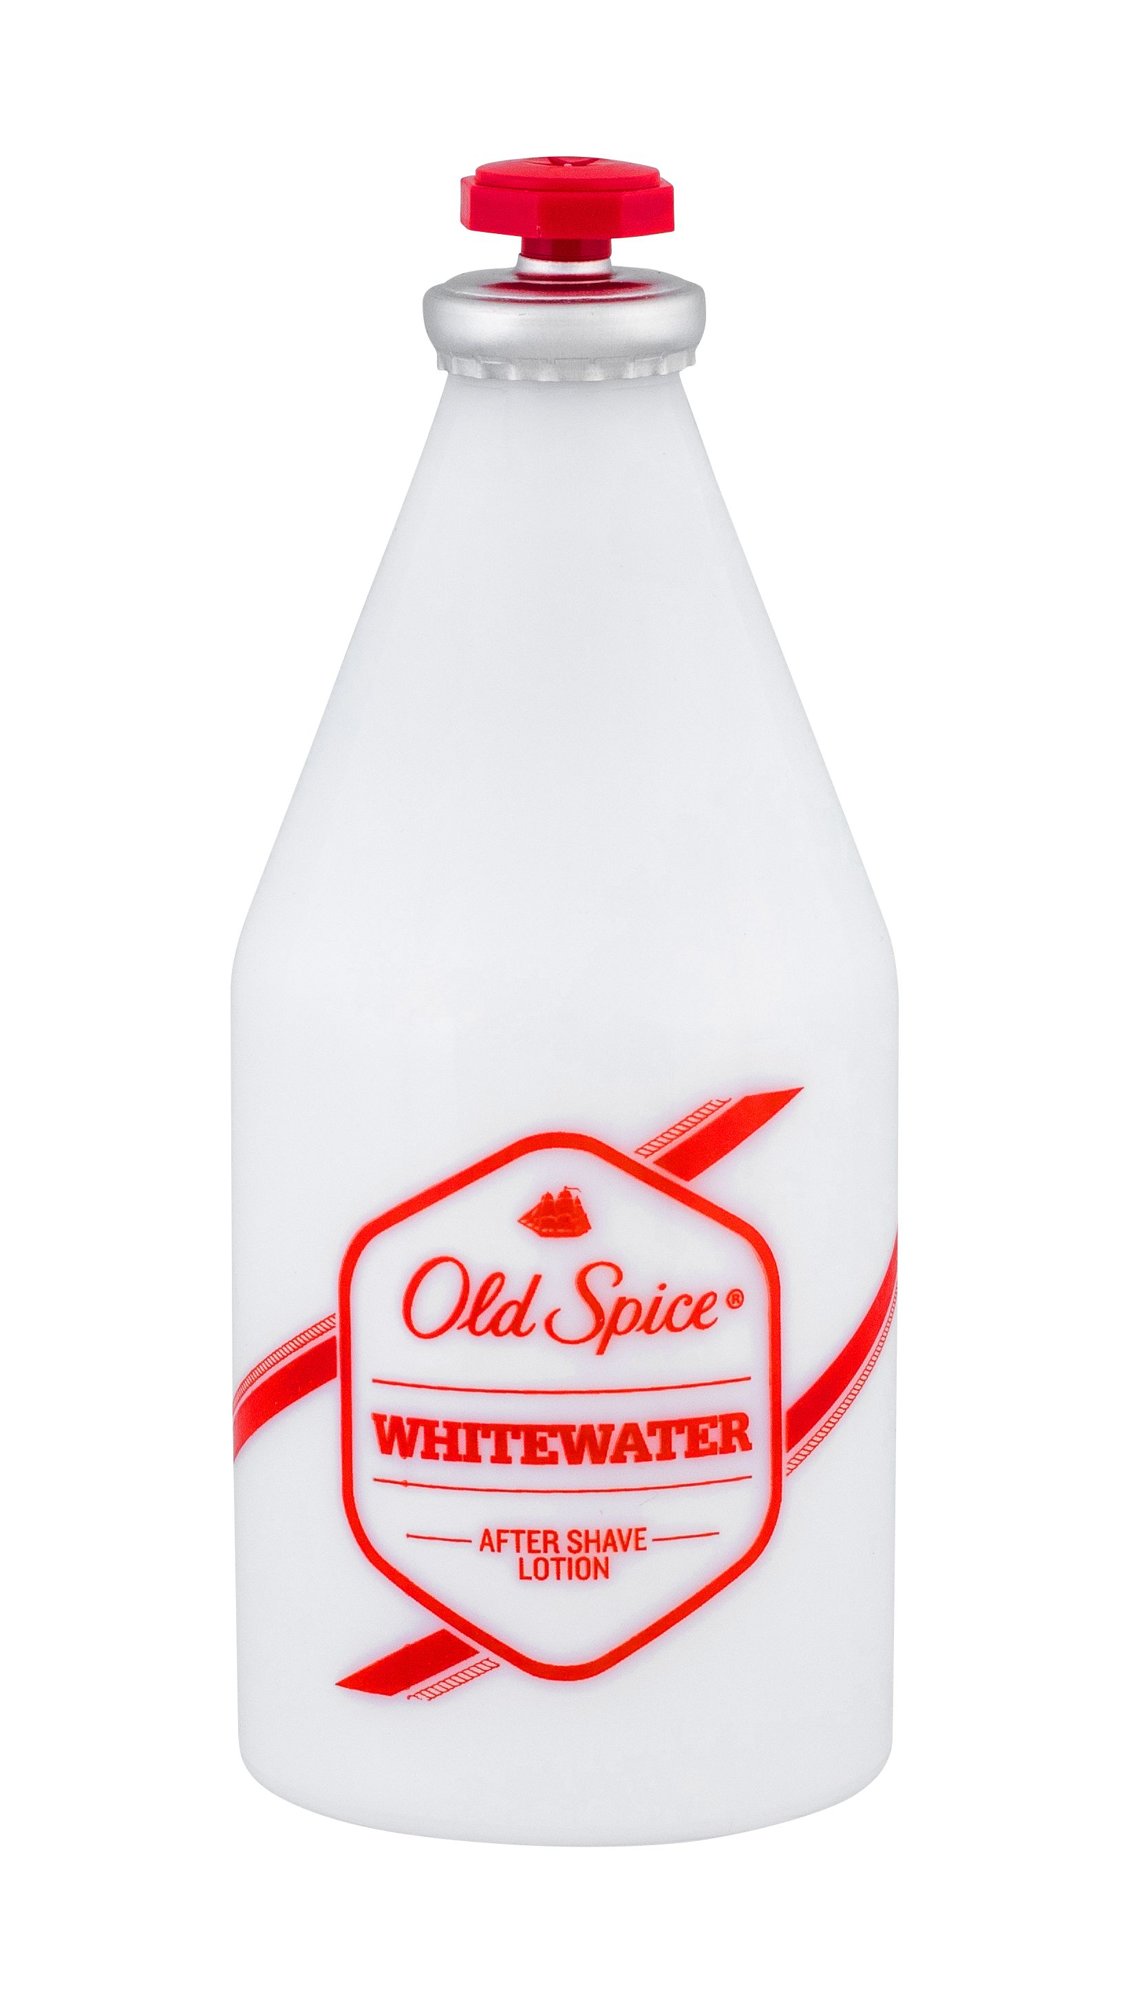 Old Spice Whitewater 100ml vanduo po skutimosi